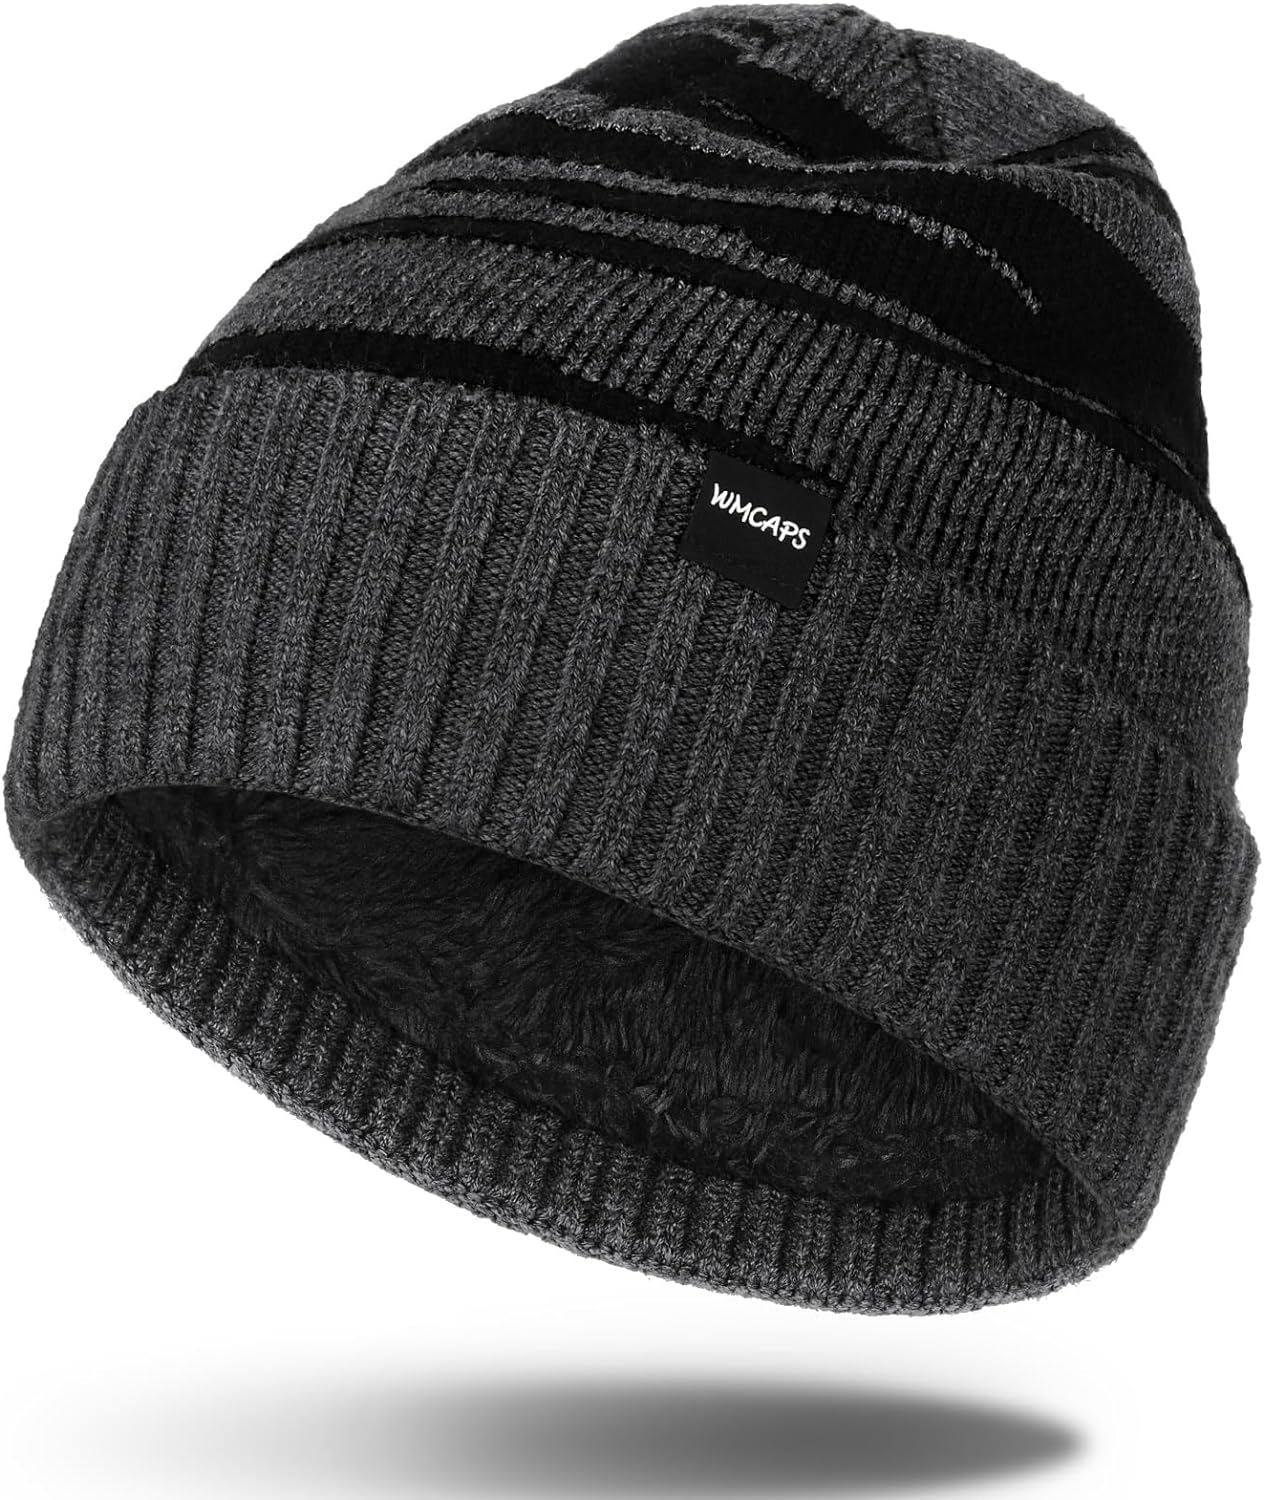 Wmcaps Beanie Hats for Men Women, Winter Fleece Lined Kint Warm Skull  Stocking C